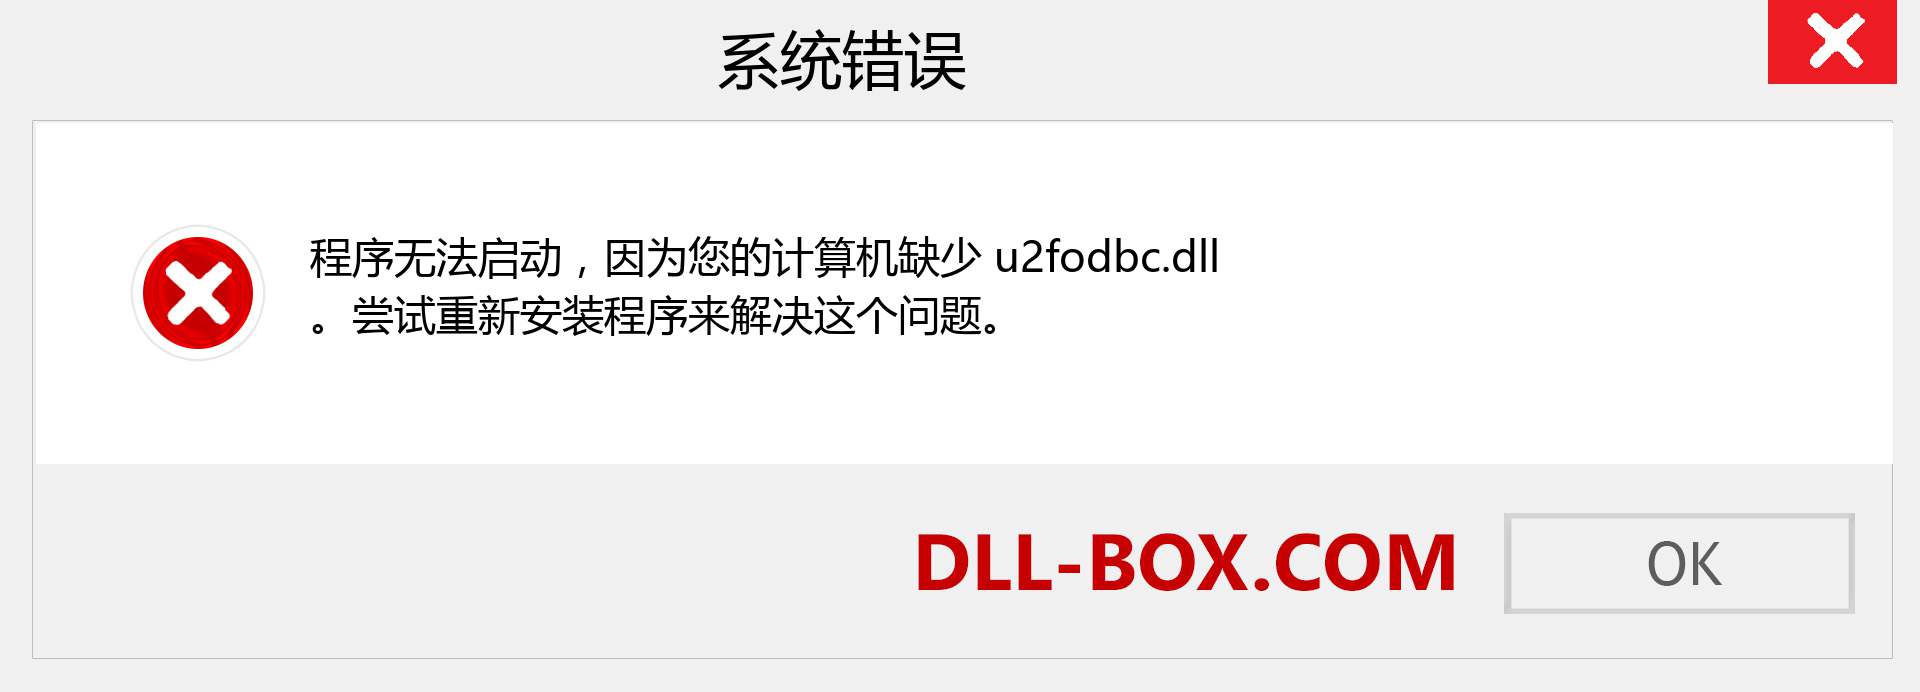 u2fodbc.dll 文件丢失？。 适用于 Windows 7、8、10 的下载 - 修复 Windows、照片、图像上的 u2fodbc dll 丢失错误